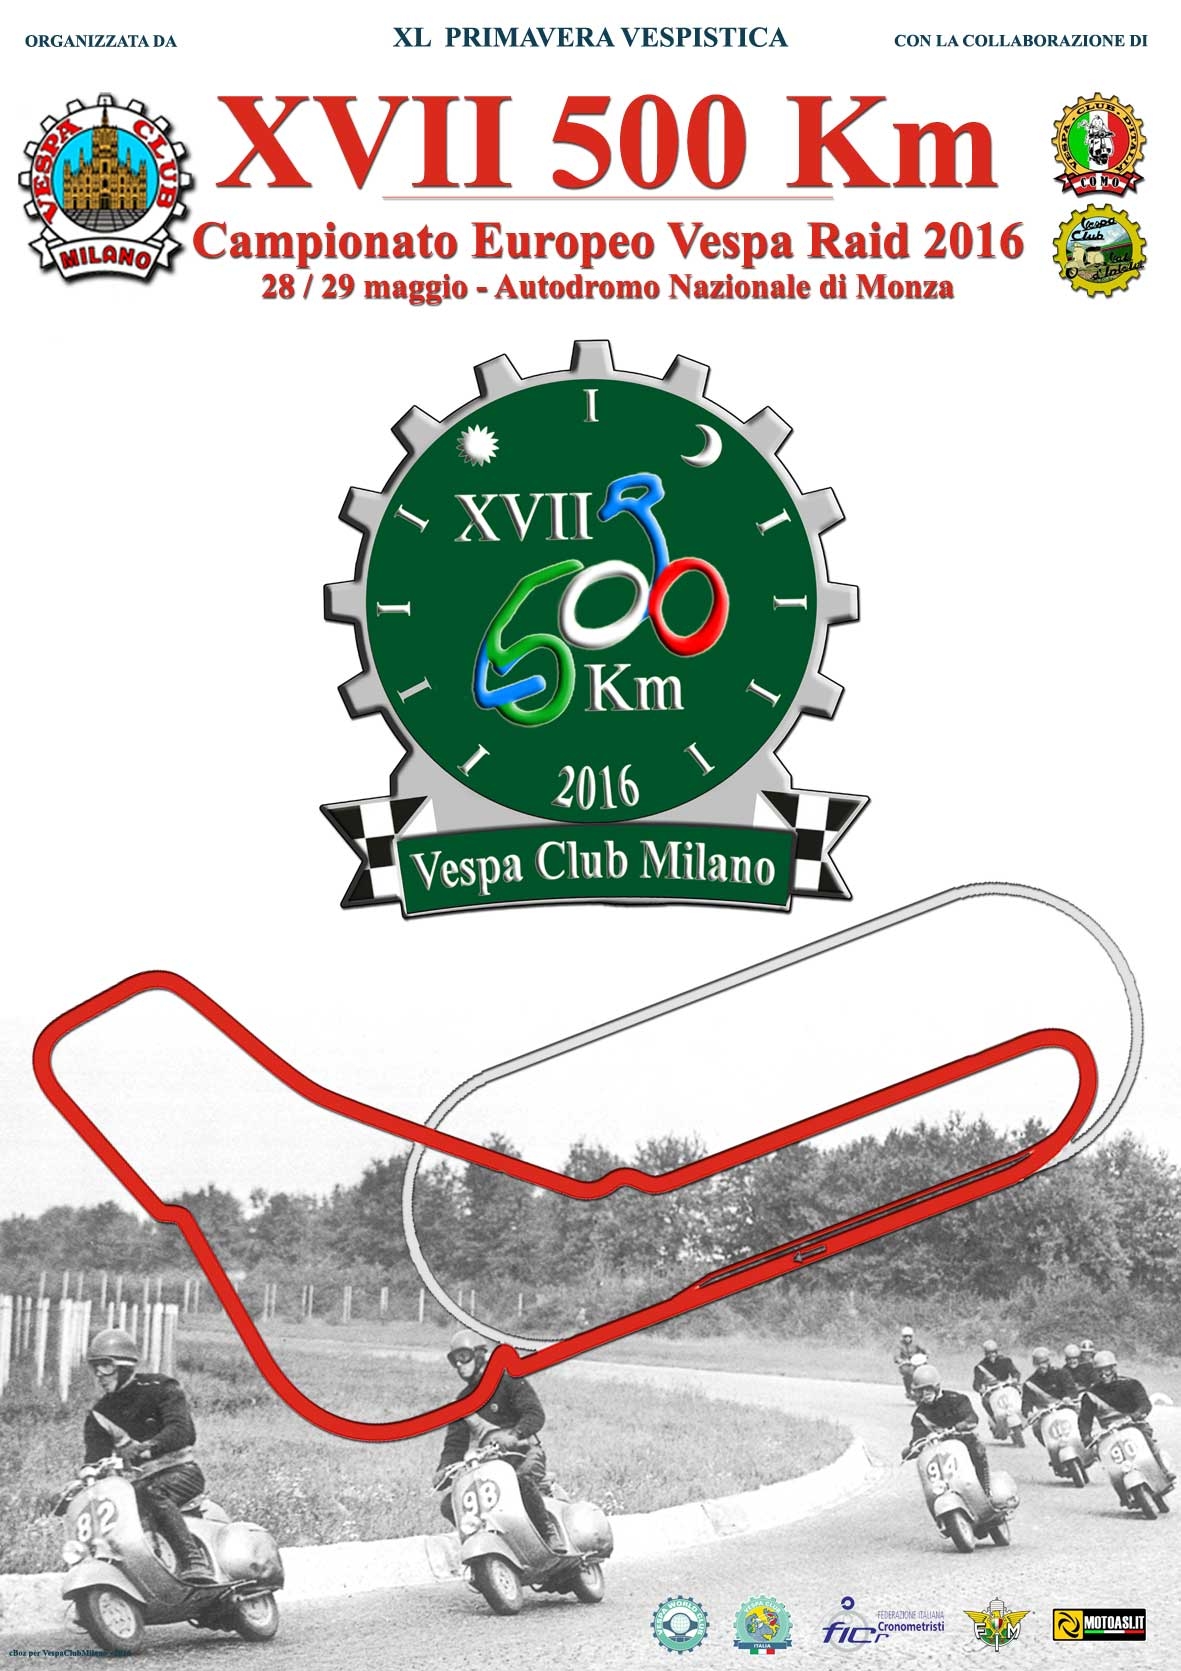 AUDAX XVII 500 Km - Campionato Europeo Vespa Raid 2016